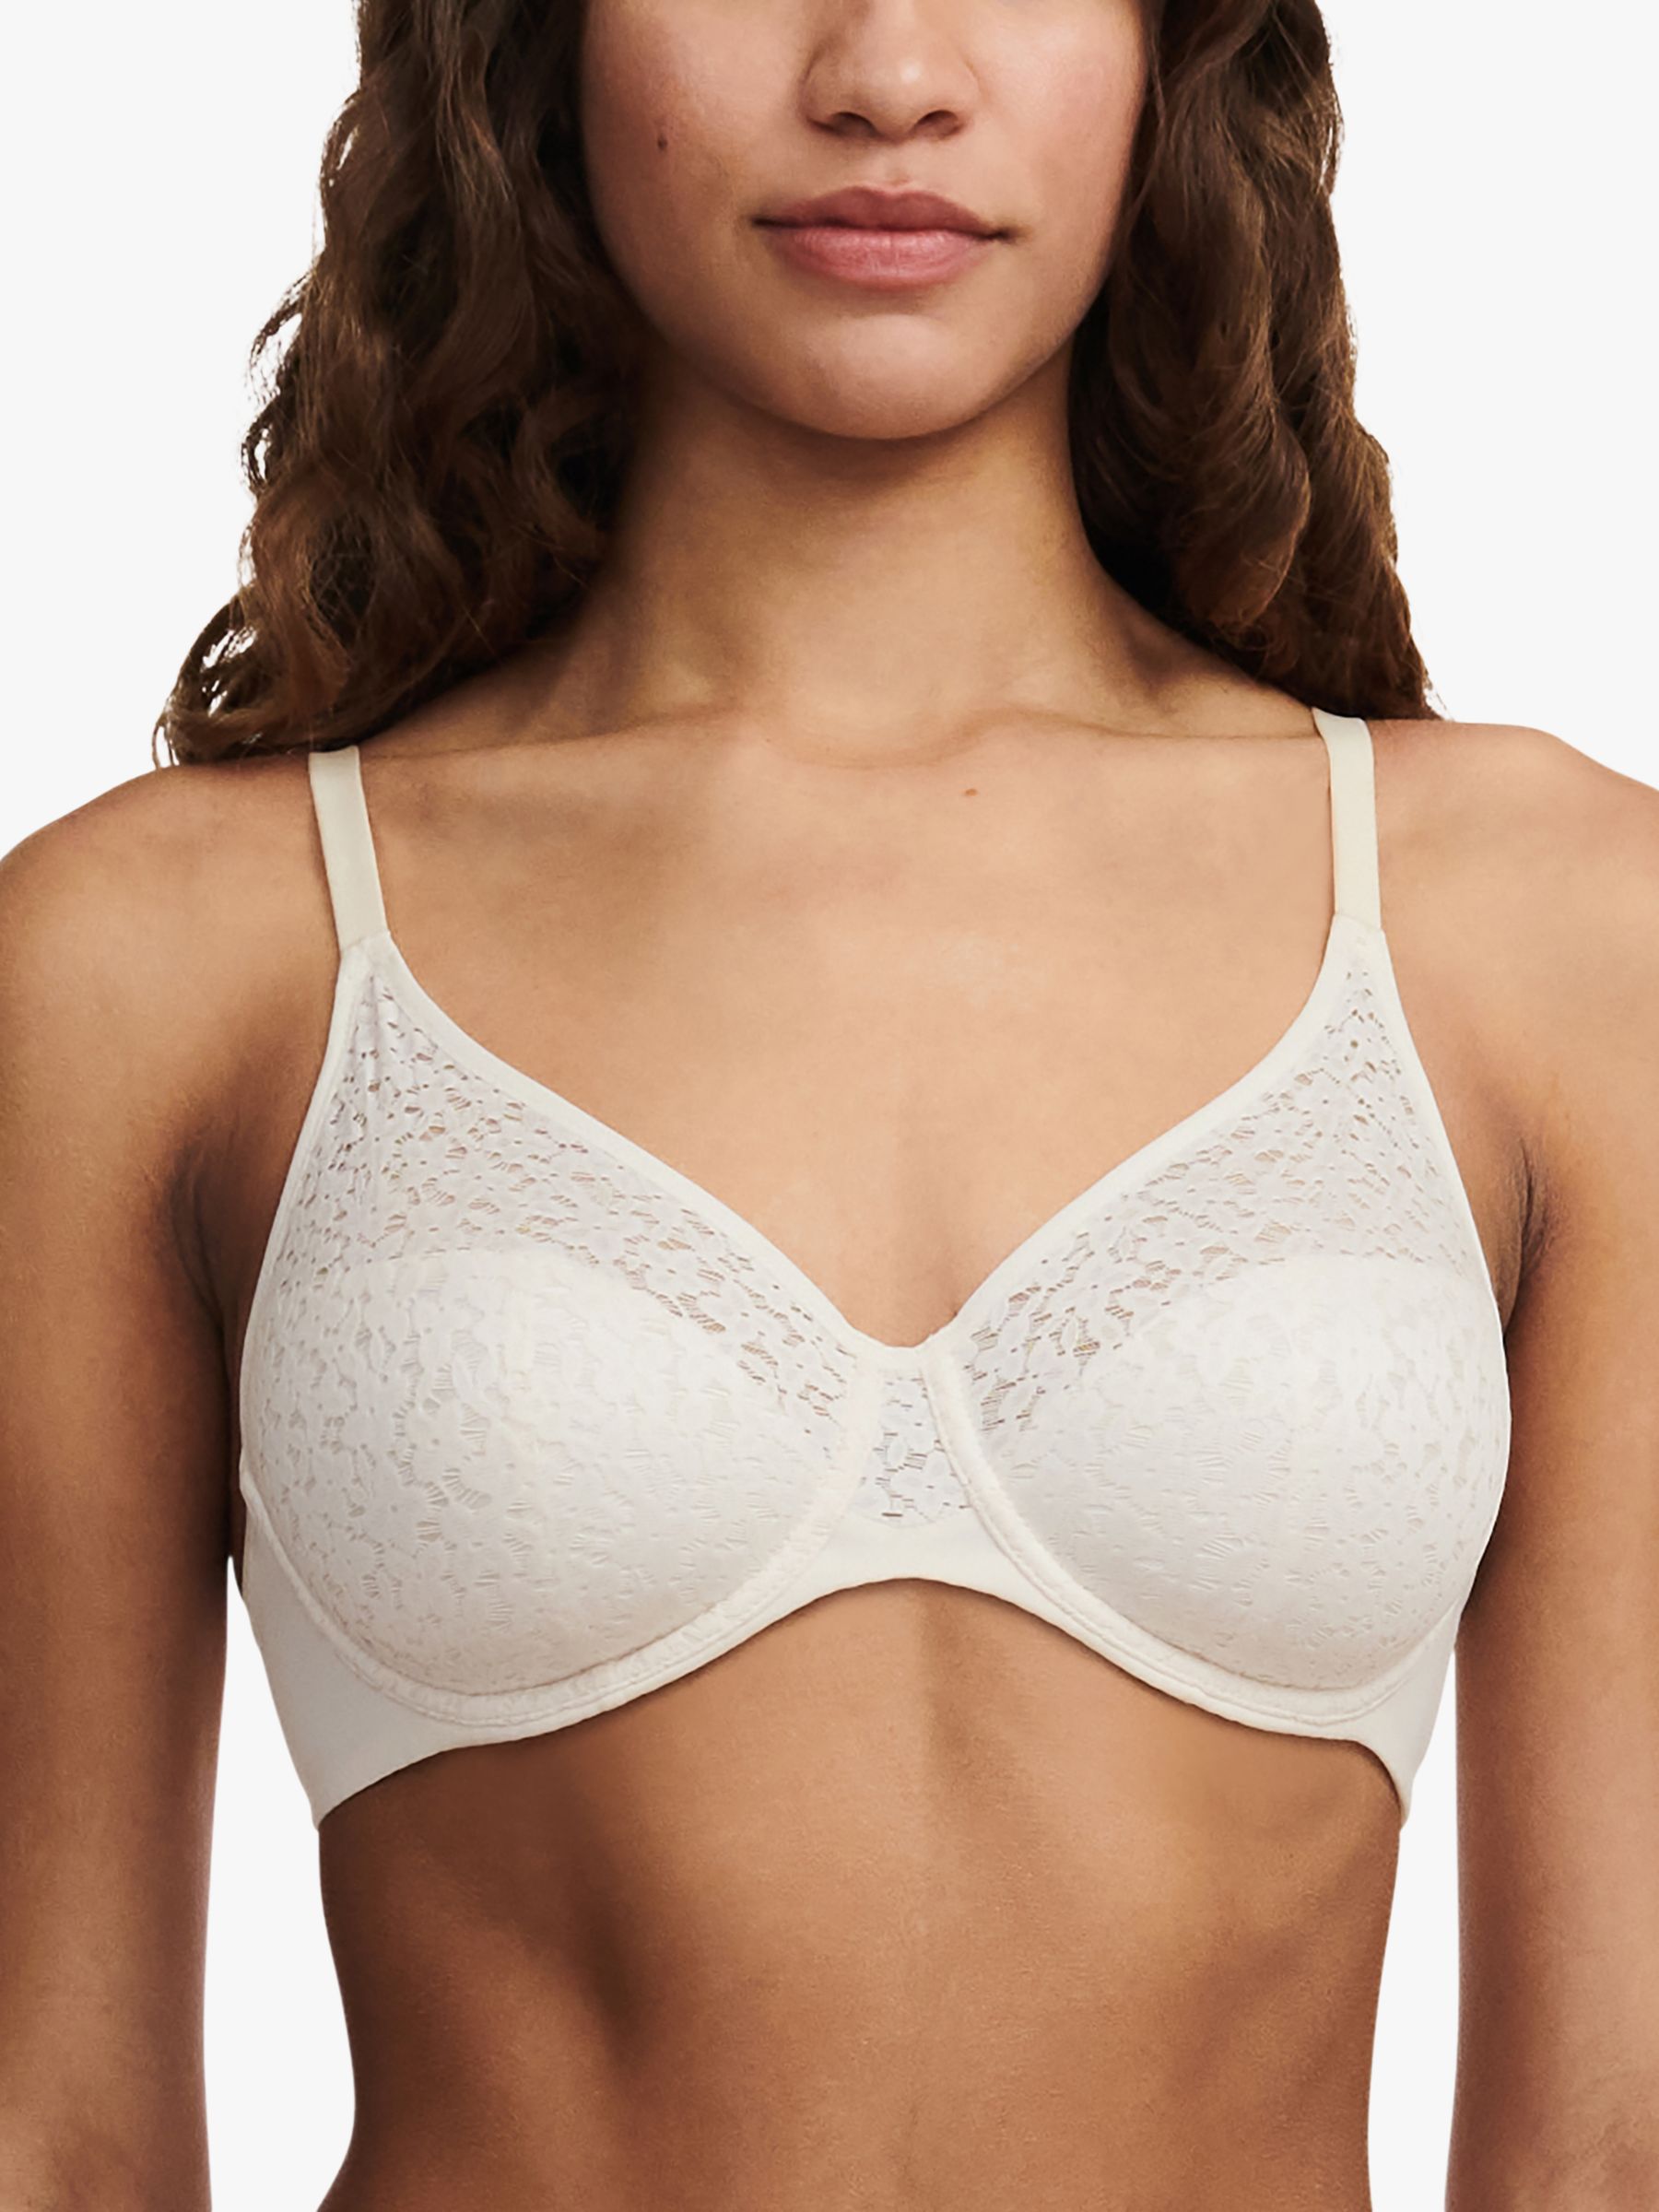 Brand new bra size 32D! - Bras